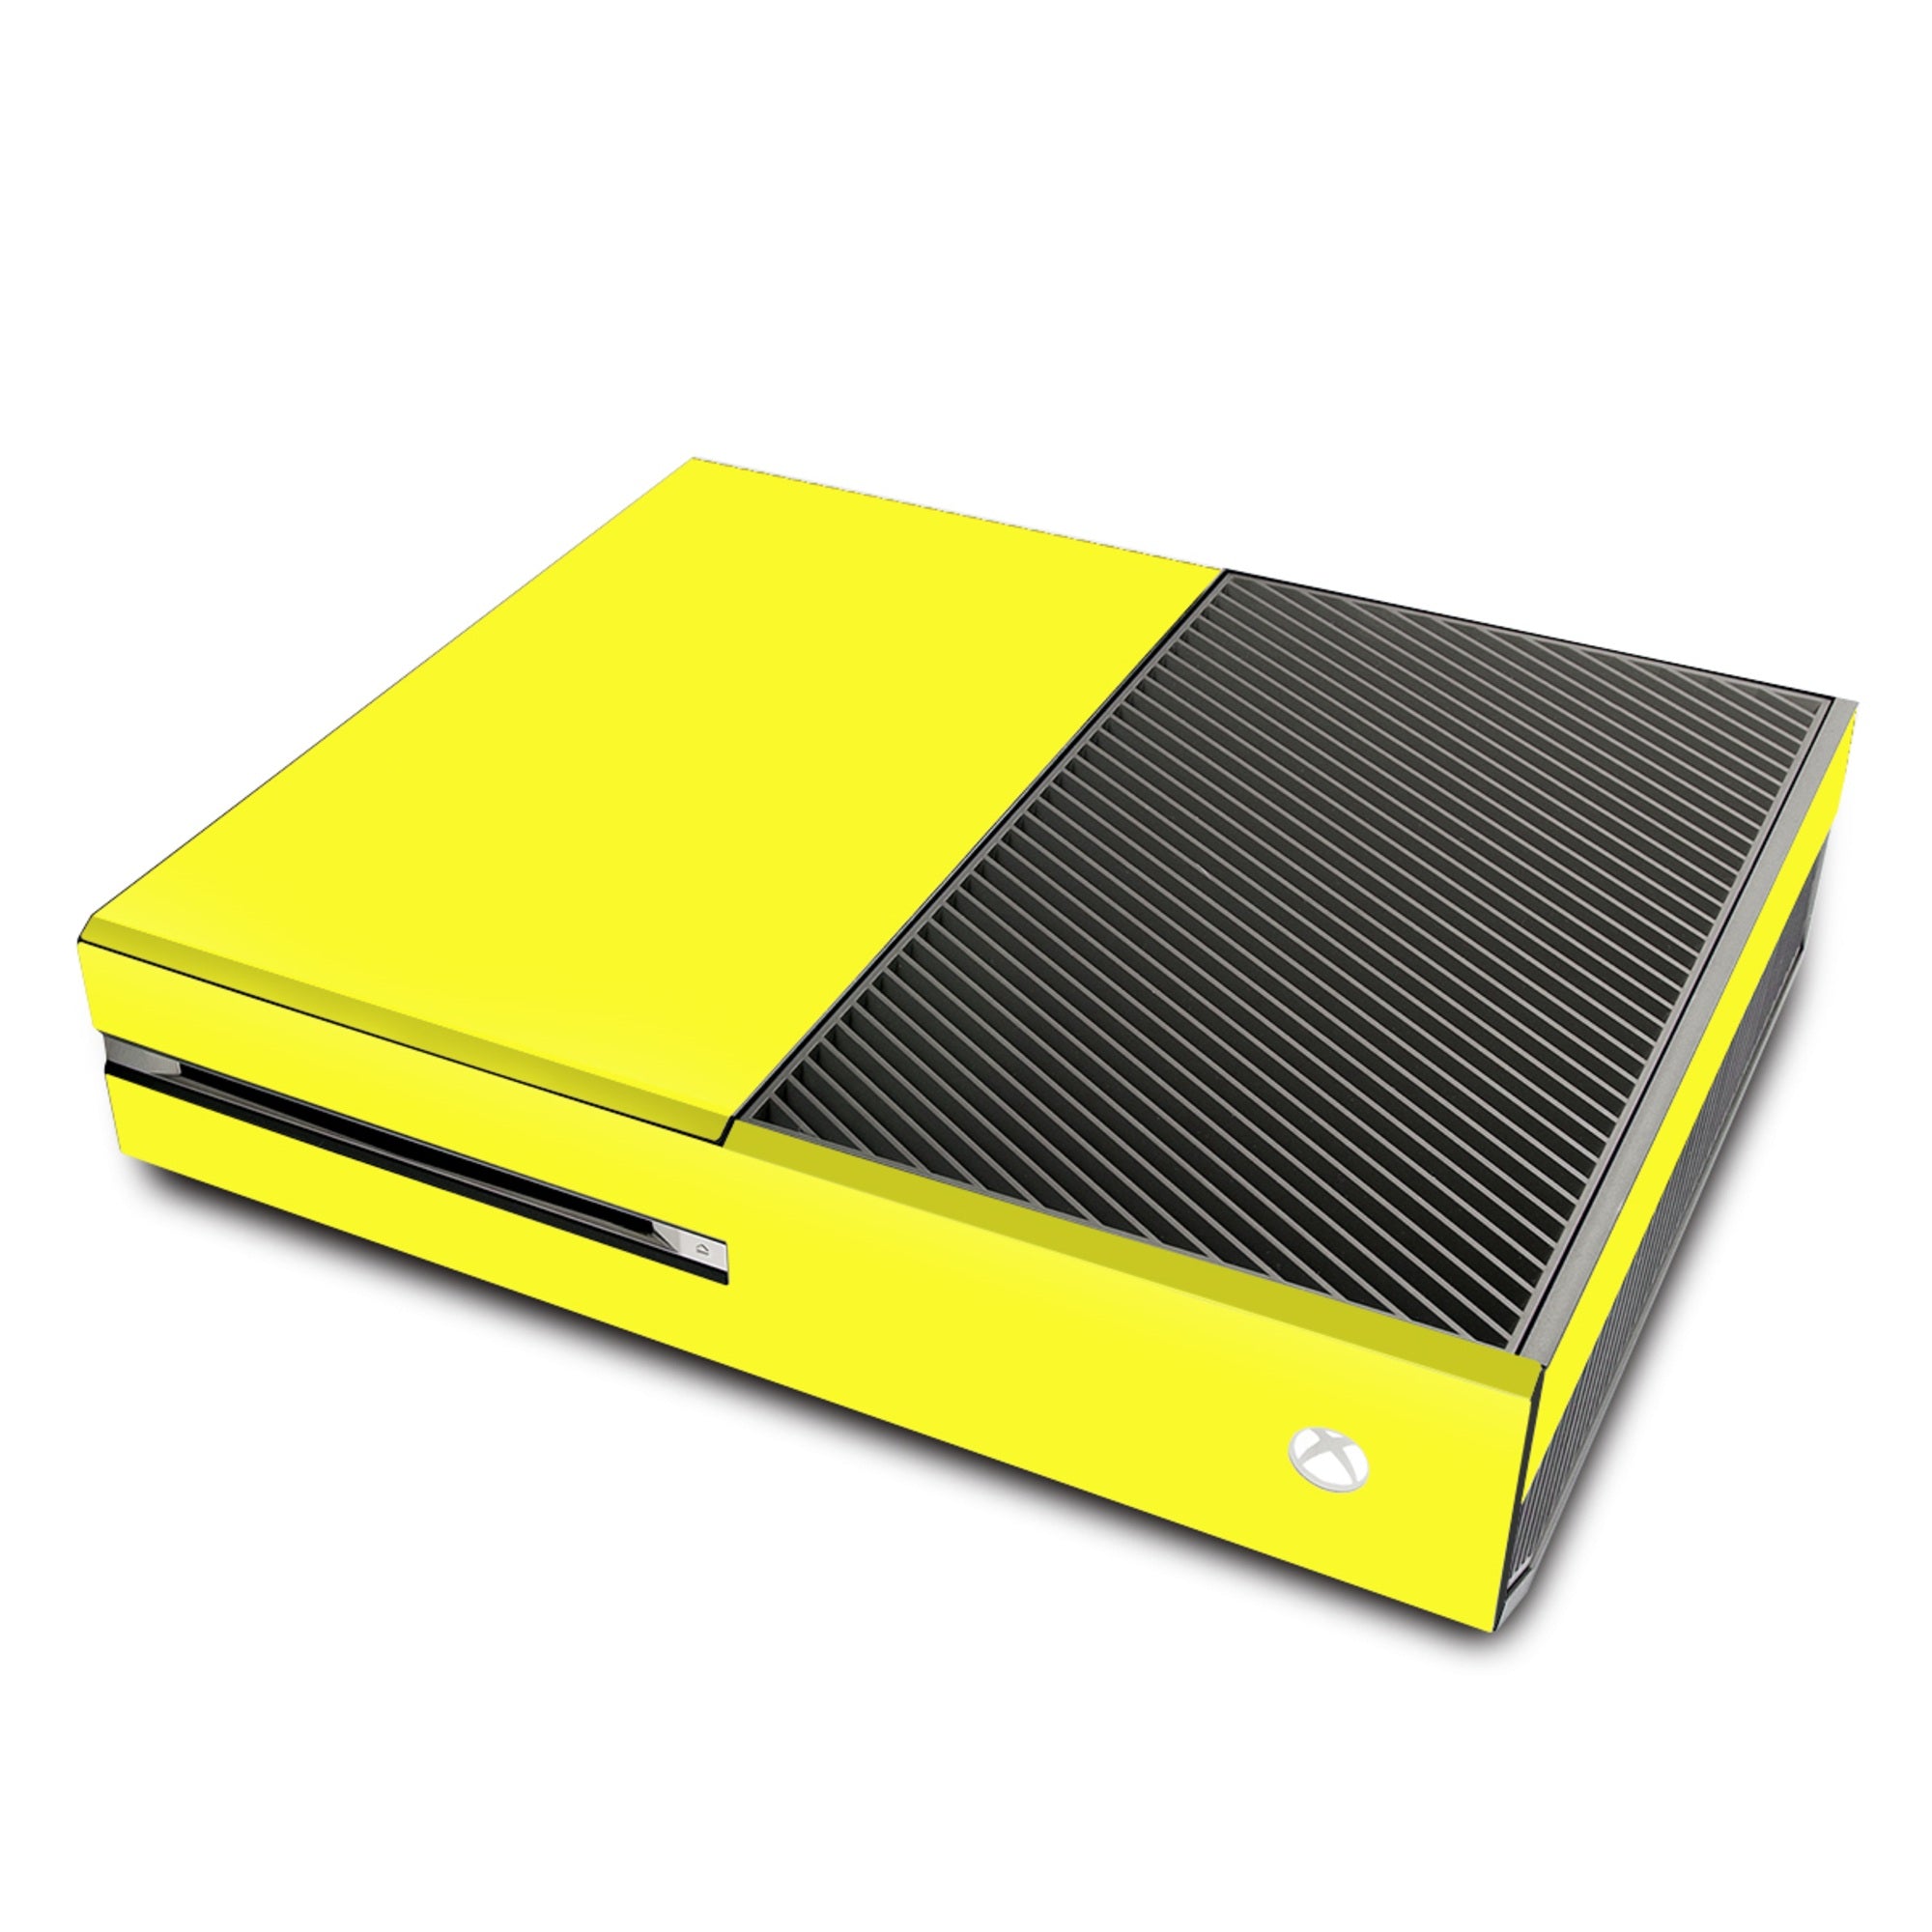 Solid State Lemon - Microsoft Xbox One Skin